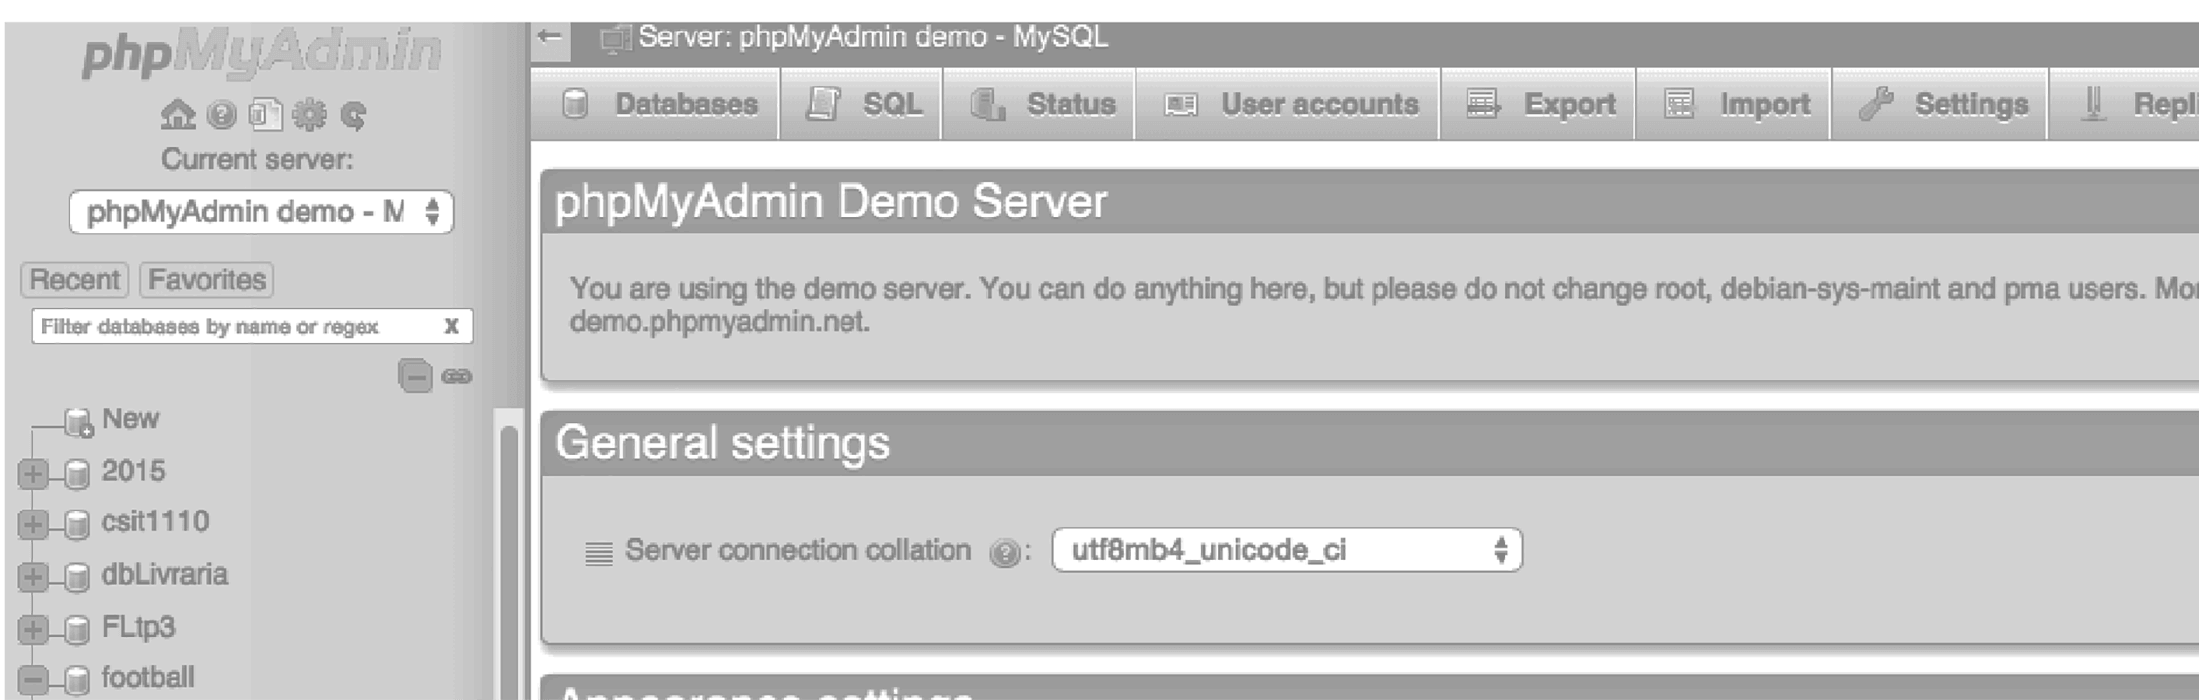 phpMyAdmin SSL force https